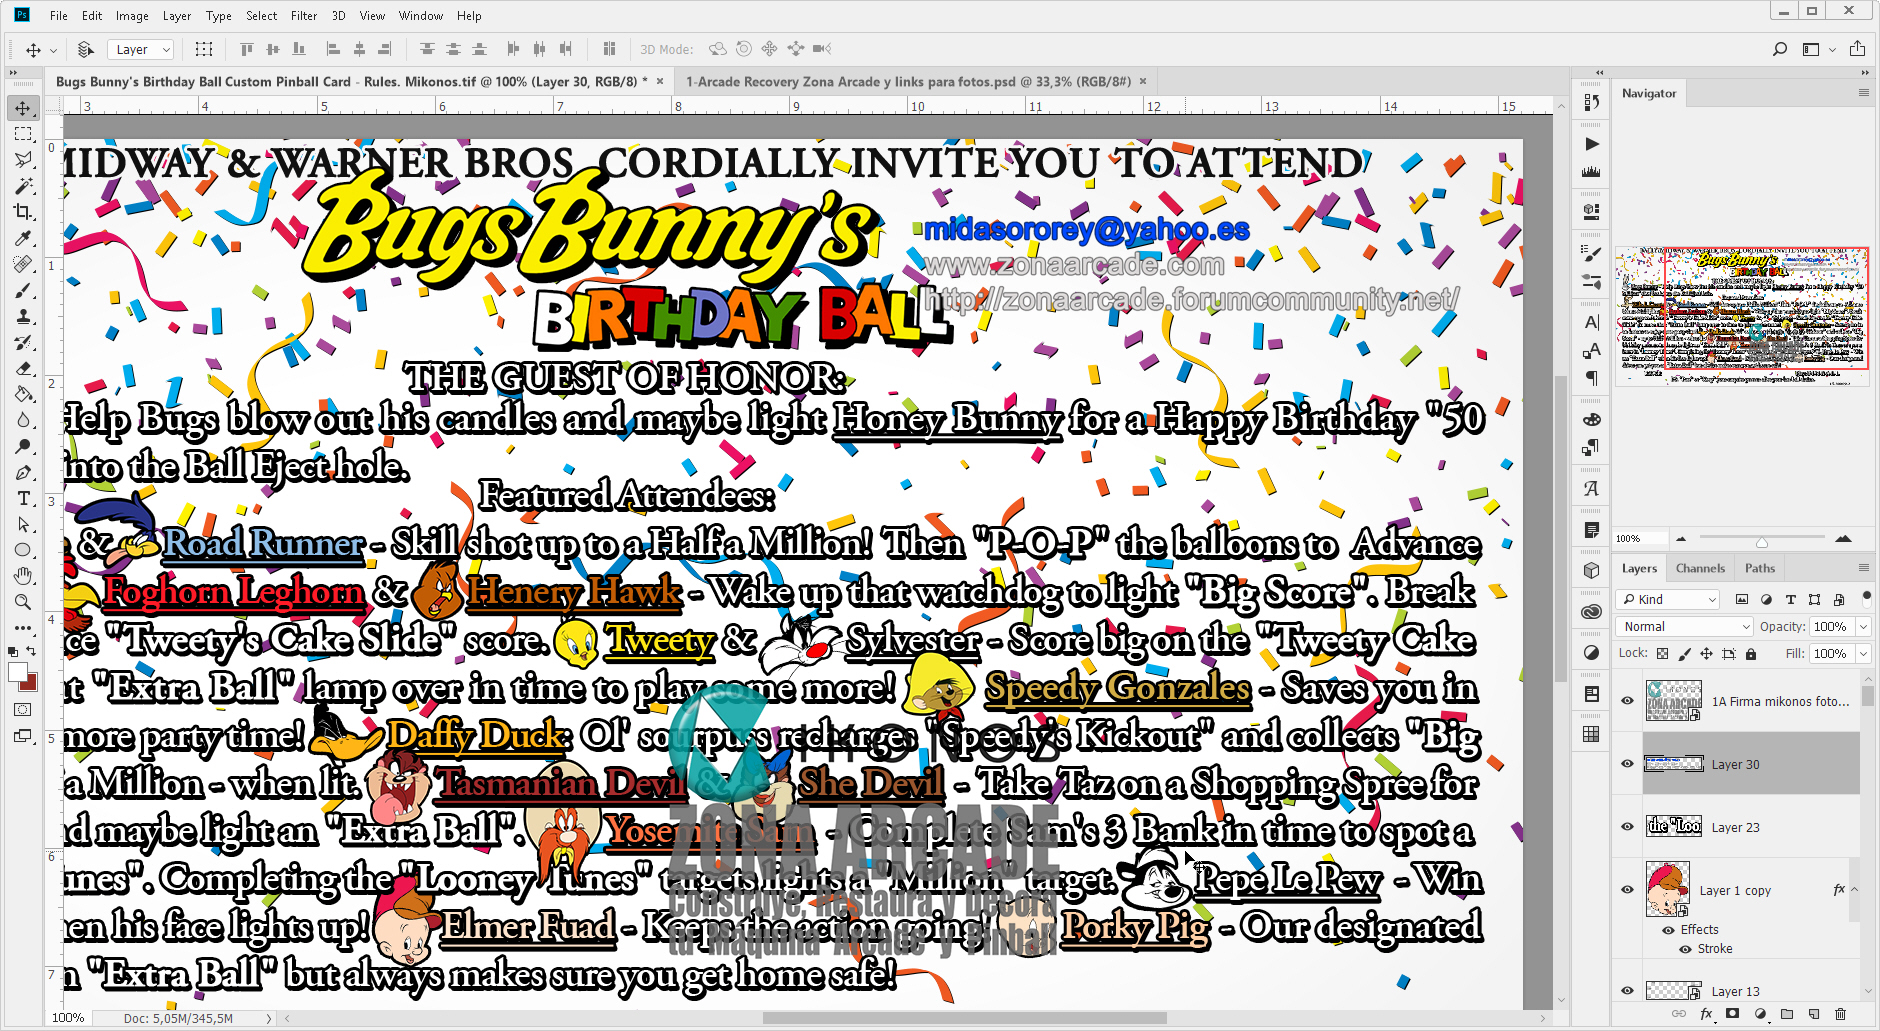 Bugs-Bunny's-Birthday-Ball-Custom-Pinball-Card-Rules-Mikonos2